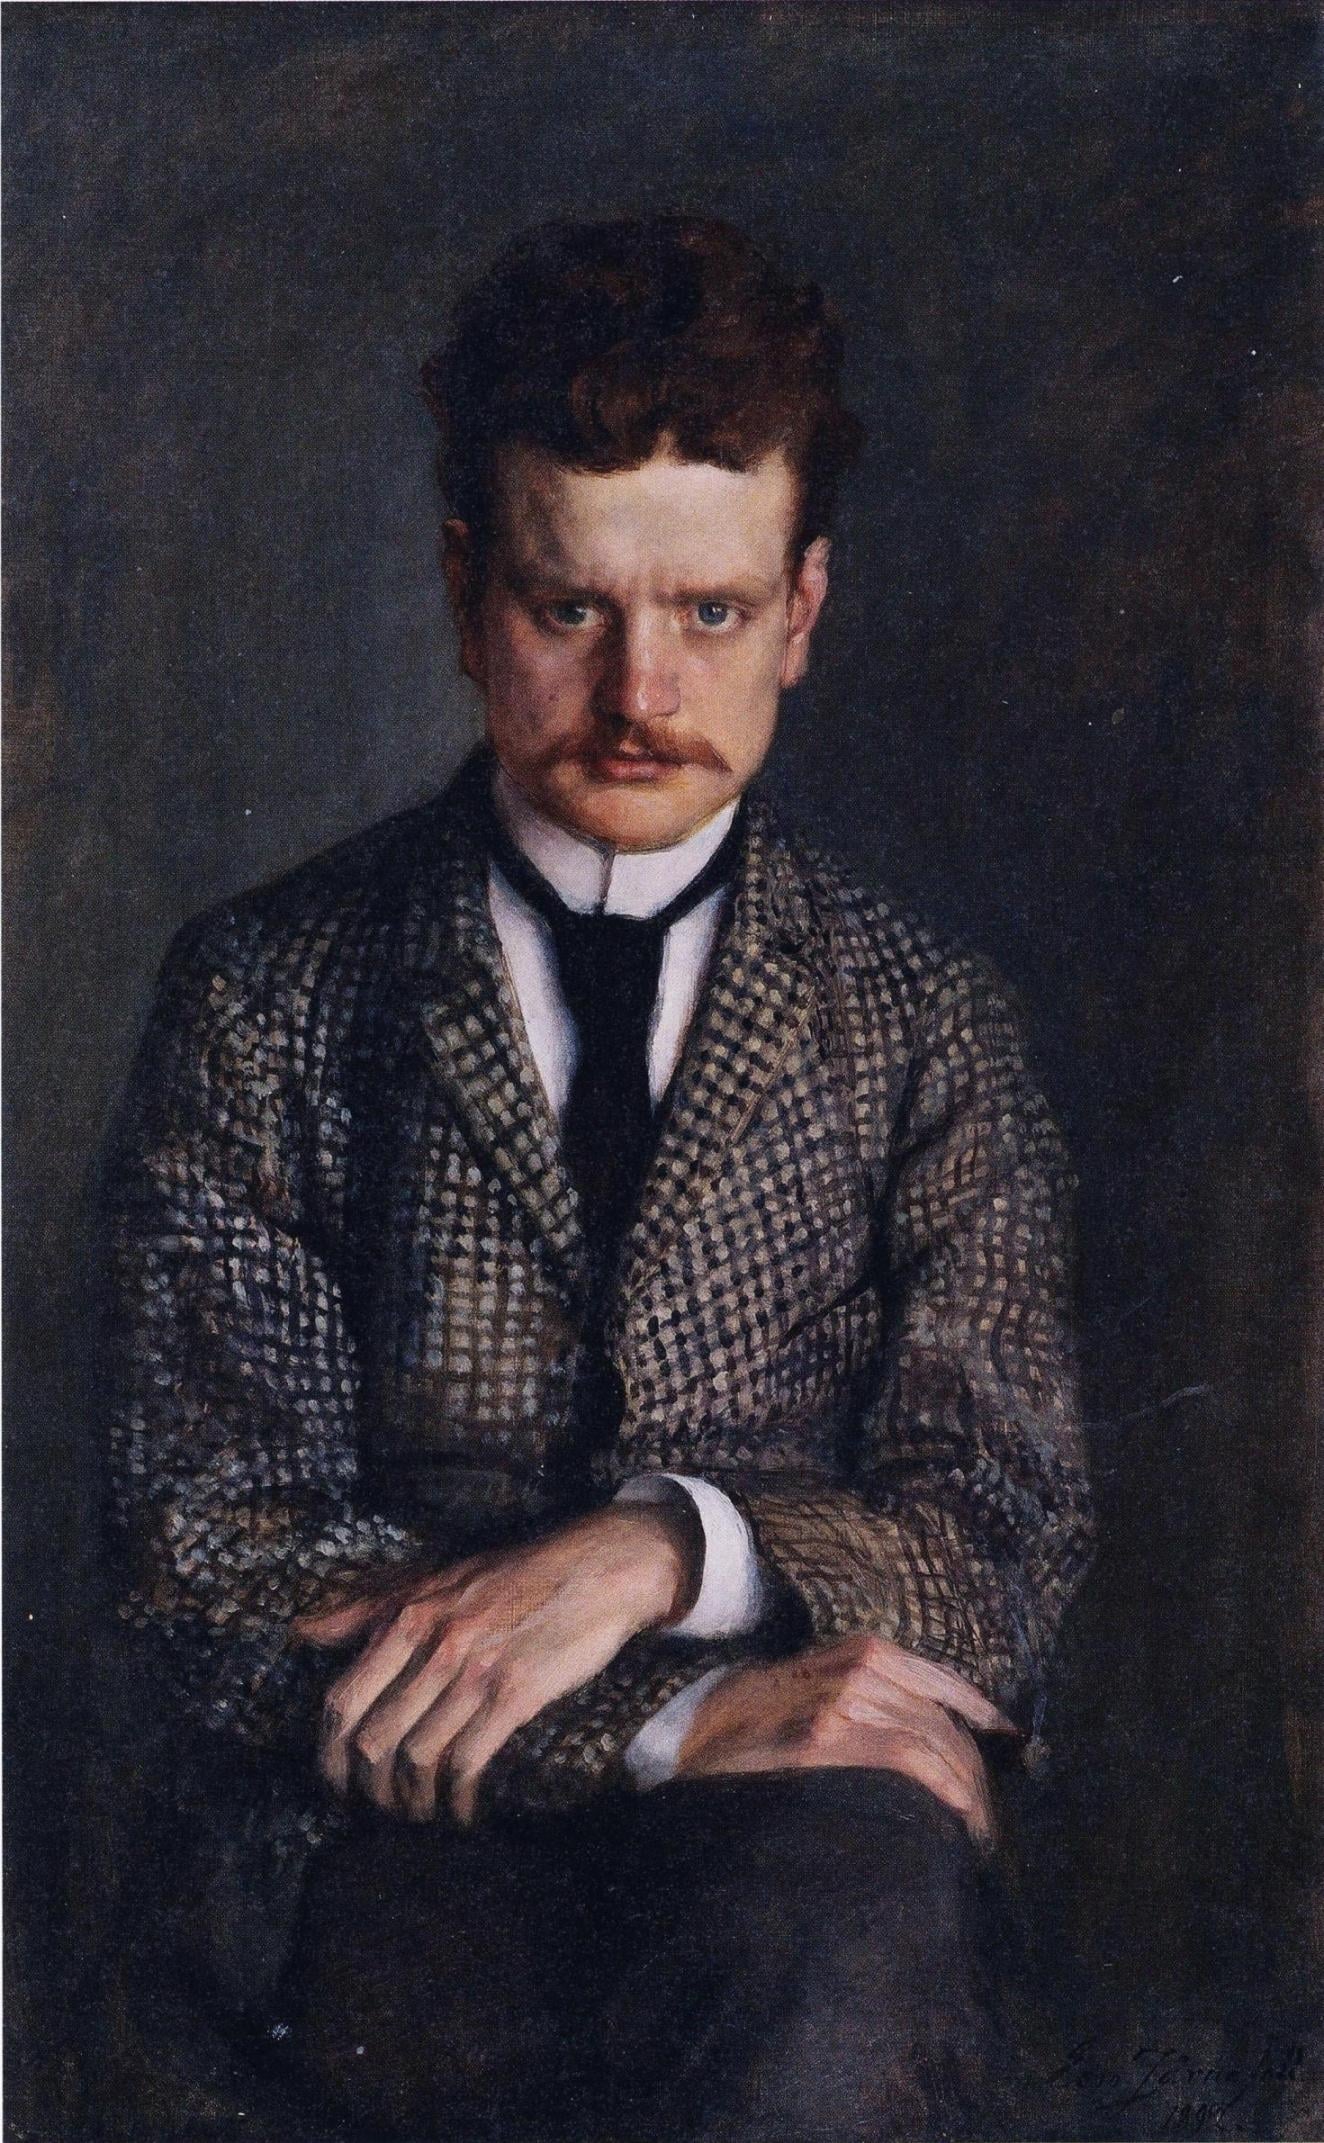 Jean Sibelius: The Early Years